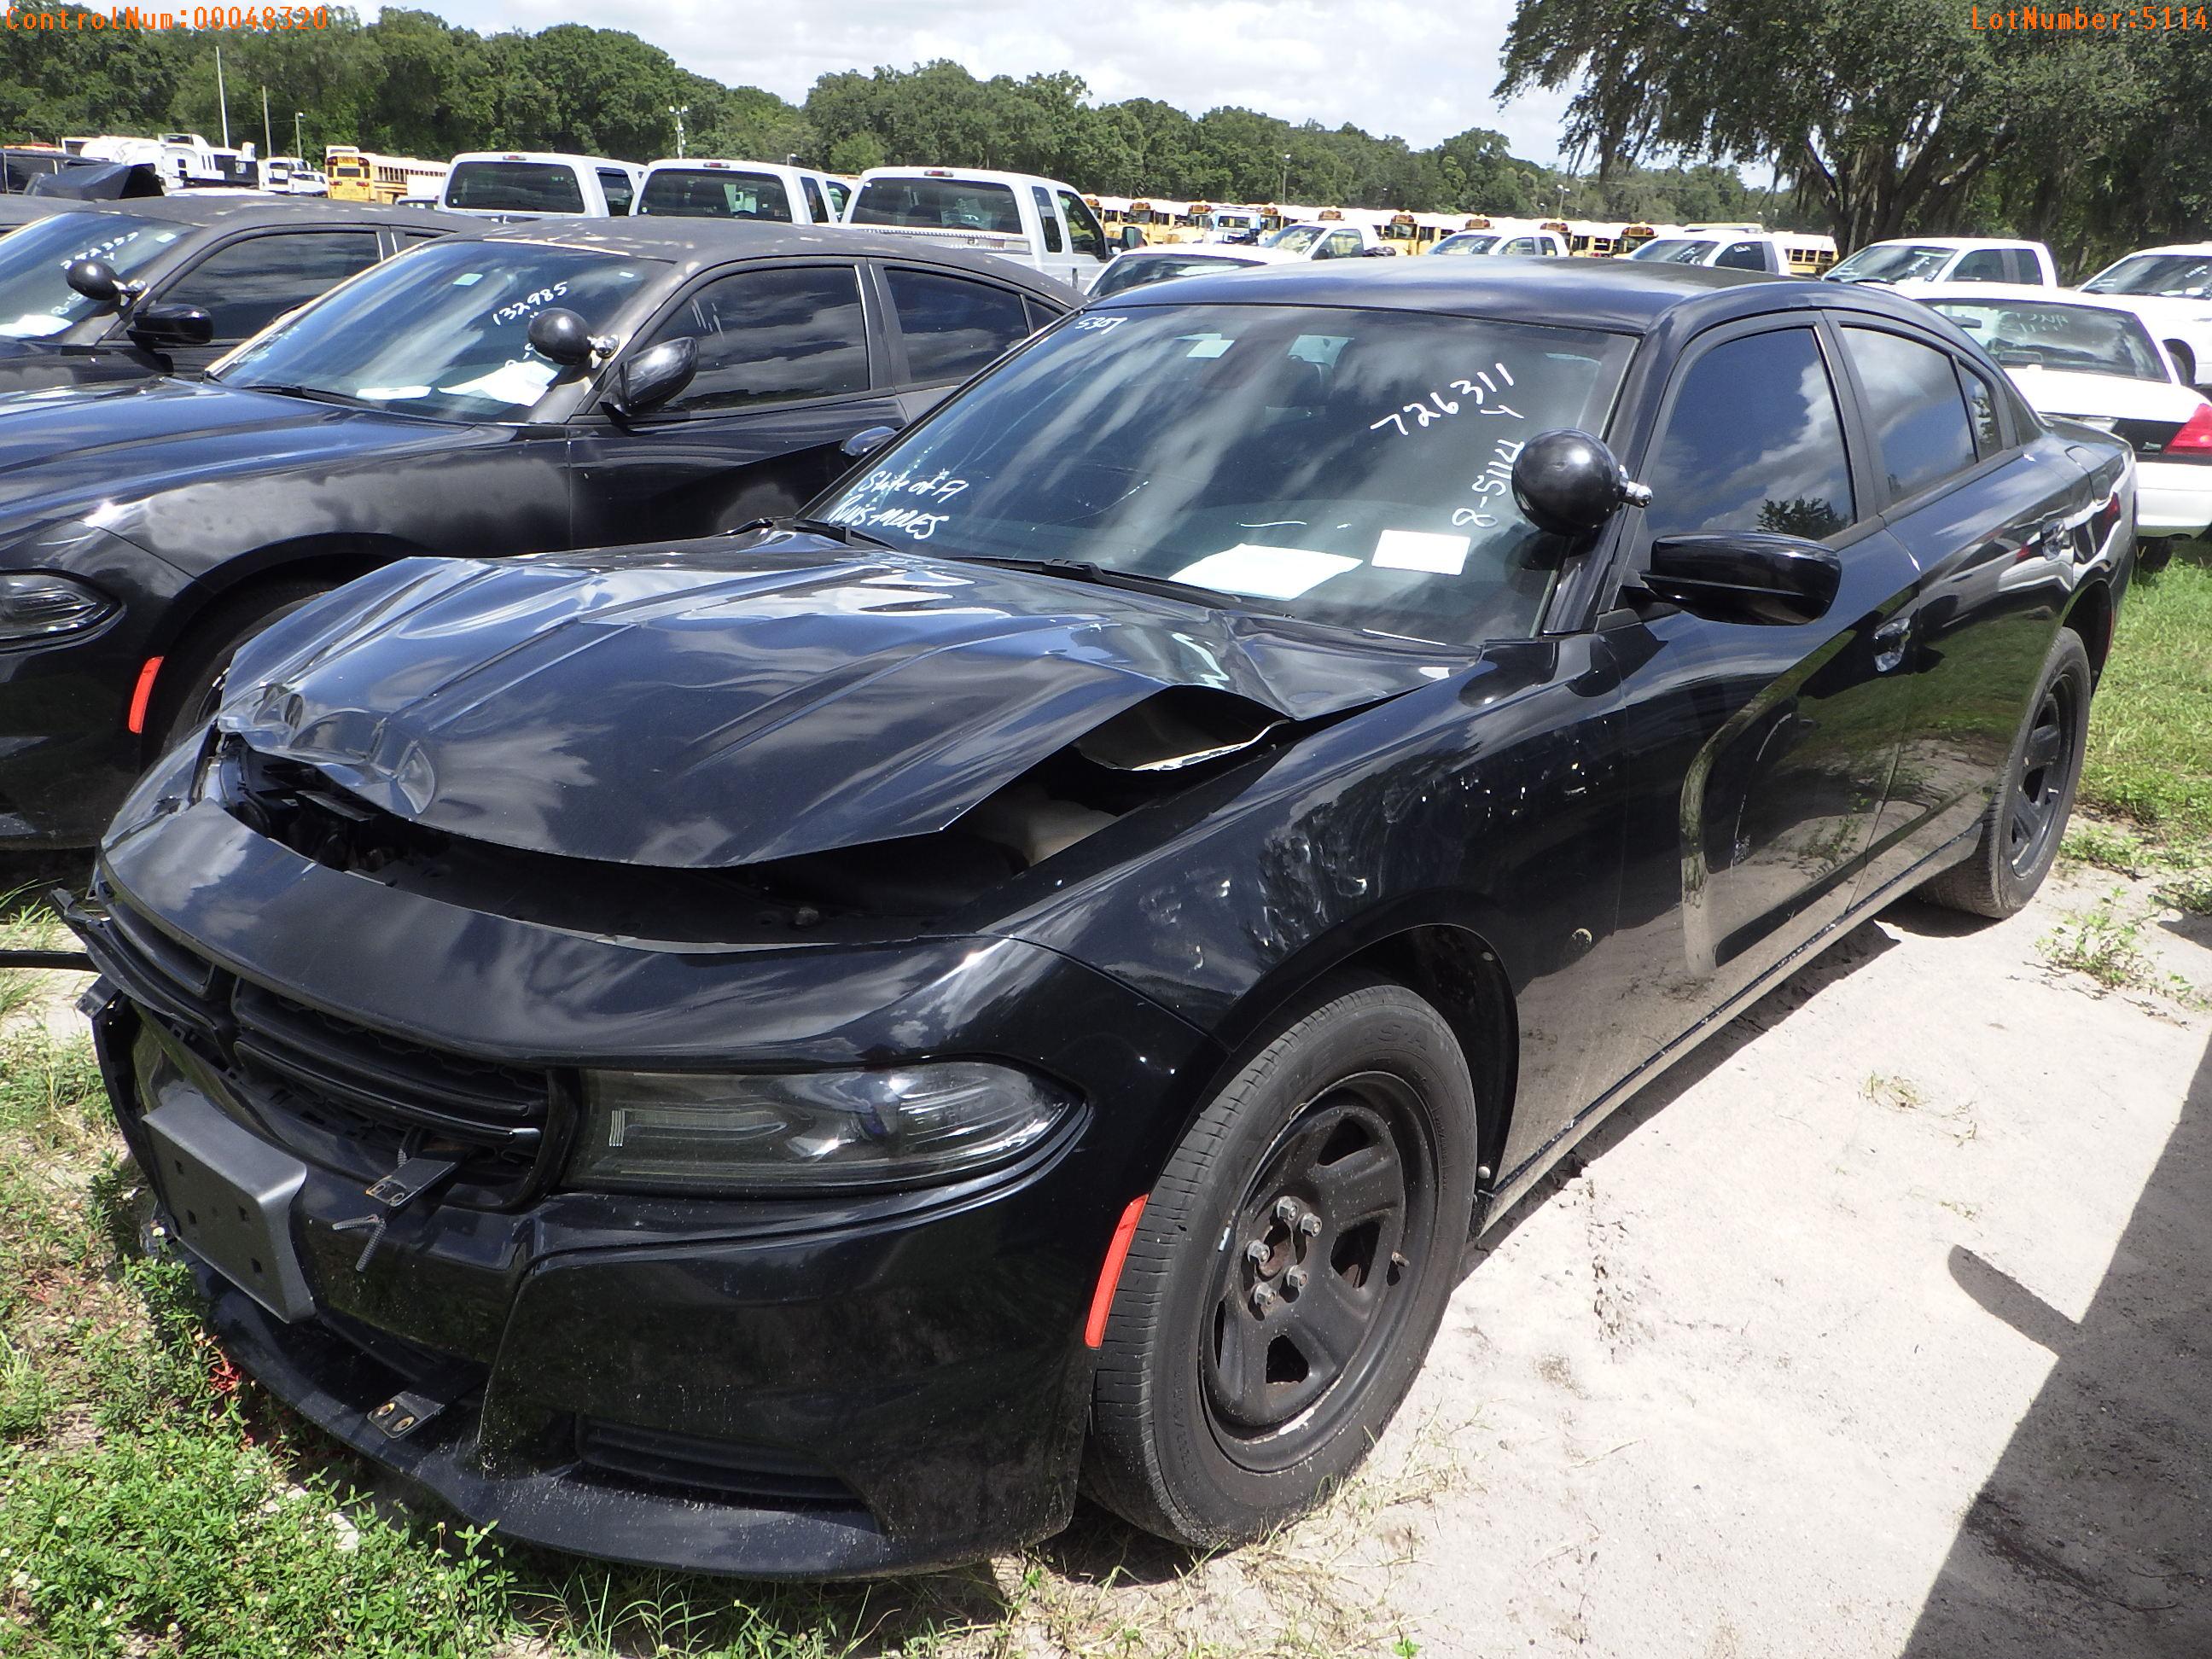 8-05114 (Cars-Sedan 4D)  Seller: Florida State F.H.P. 2015 DODG CHARGER